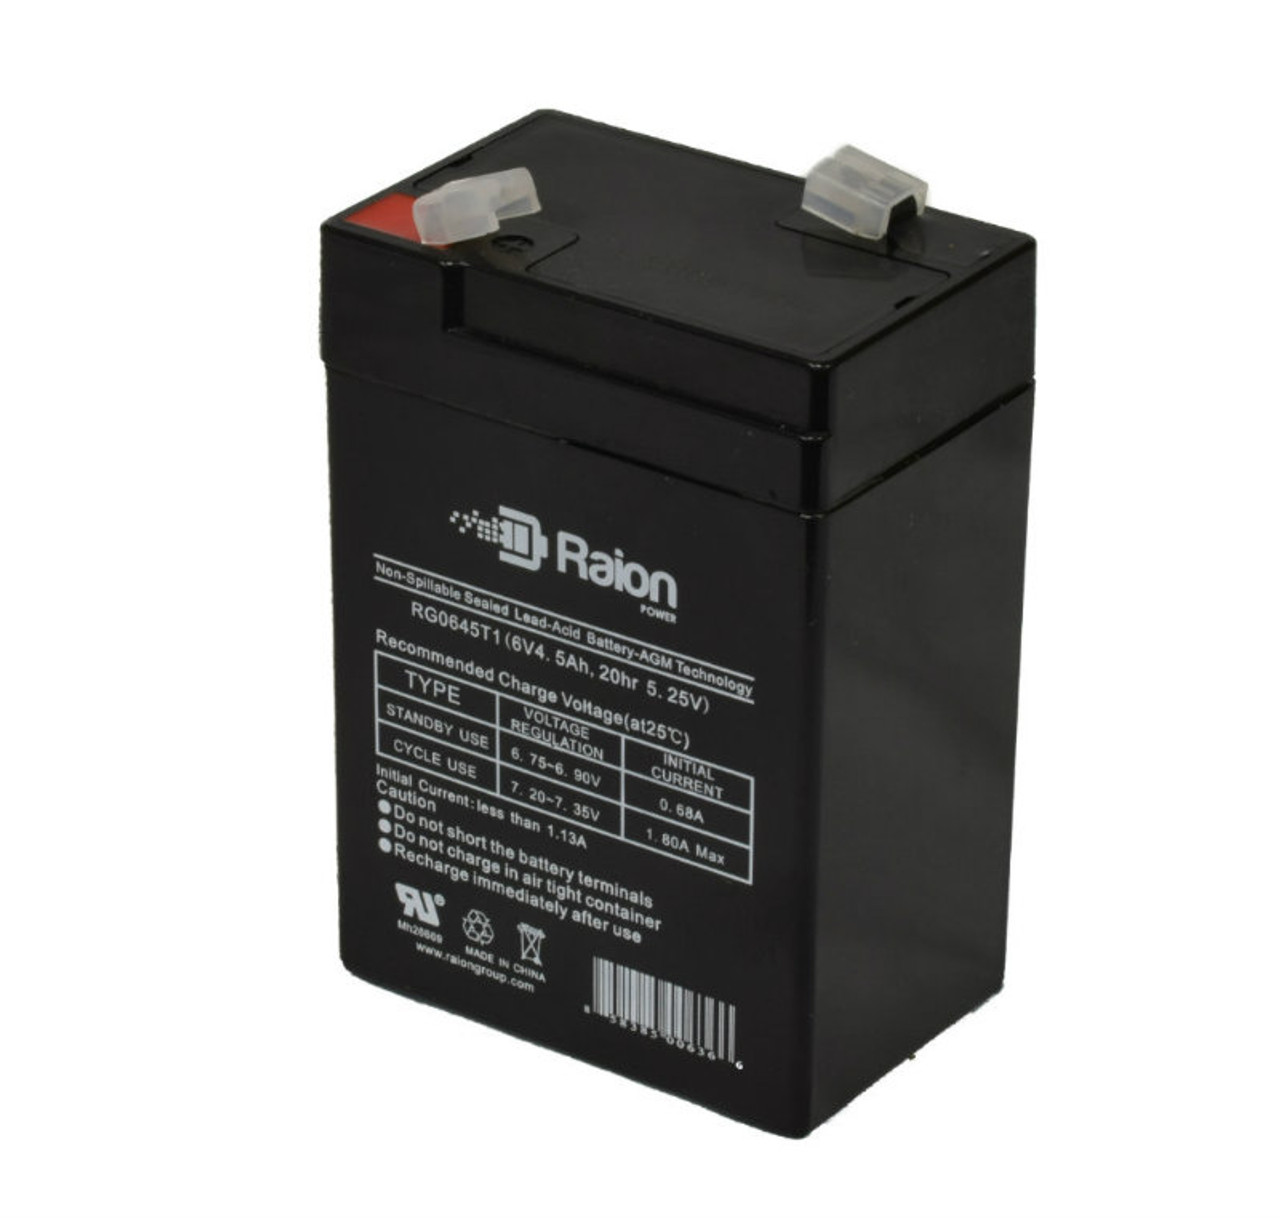 Raion Power RG0645T1 6V 4.5Ah Replacement Battery Cartridge for Sonnenschein S100